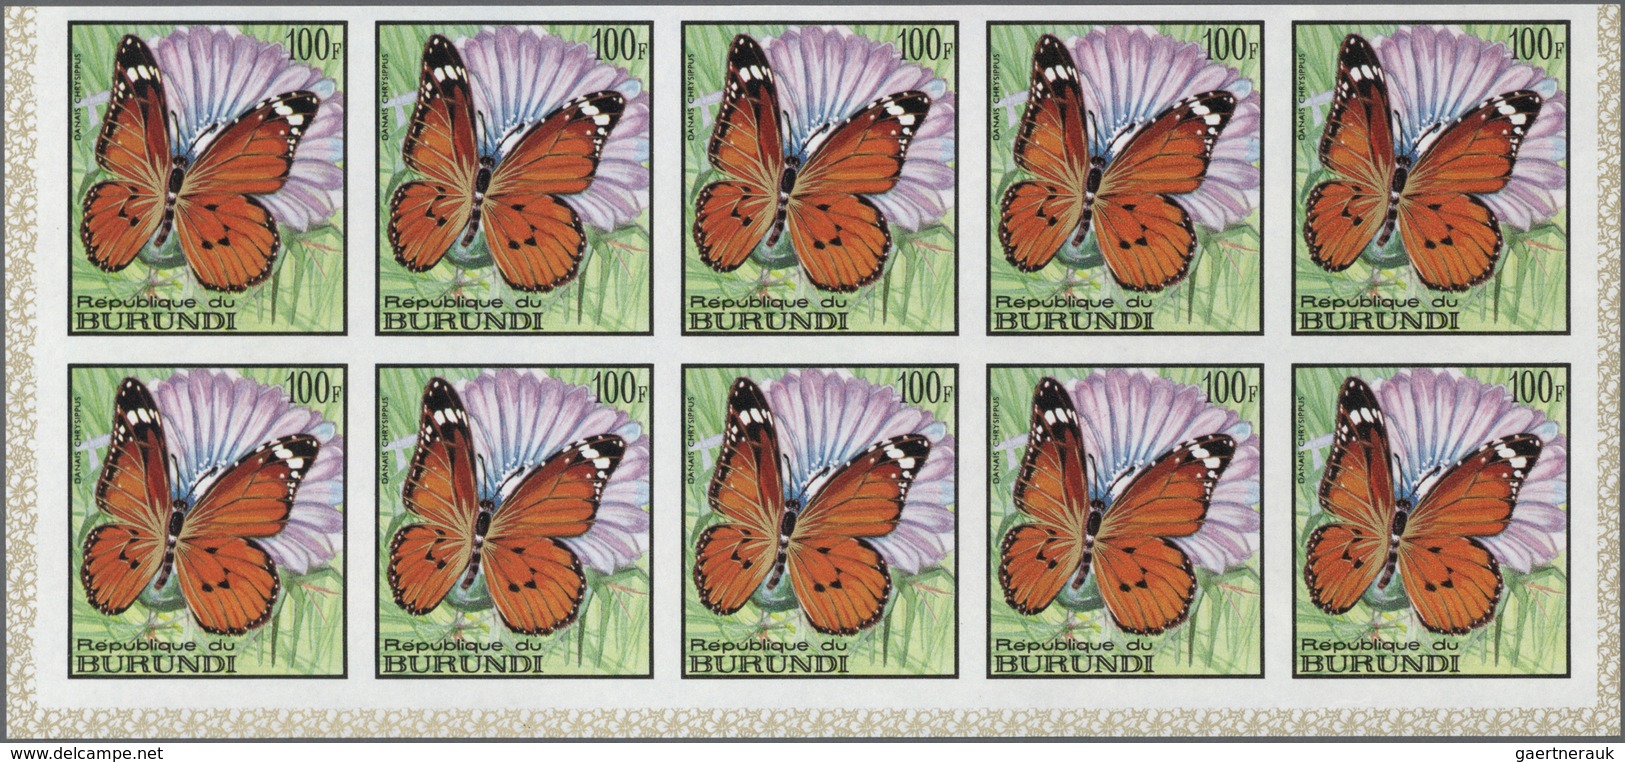 Burundi: 1968, Butterflies complete set of 16 in IMPERFORATE blocks of ten from lower margins, mint